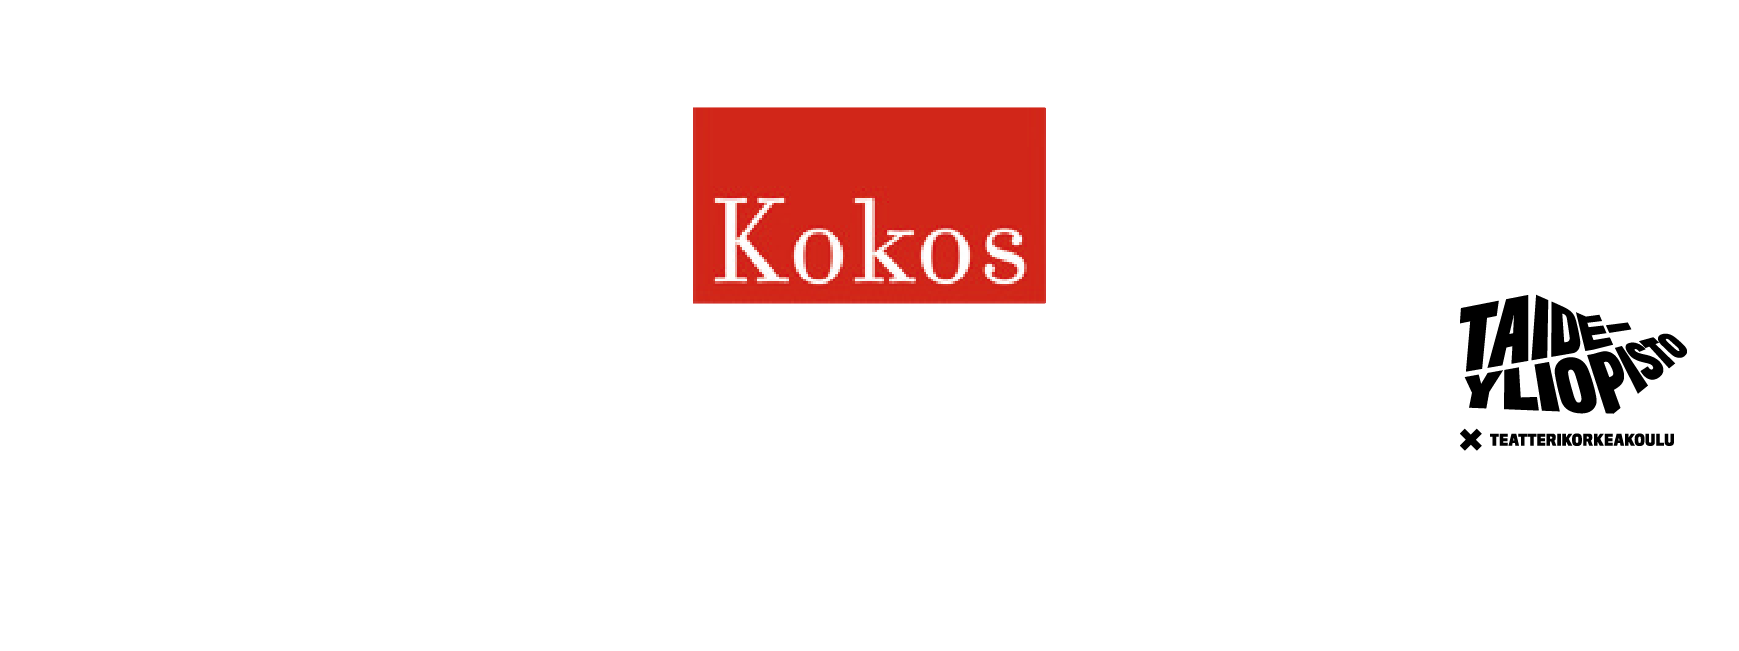 Image shows the Kokos logo